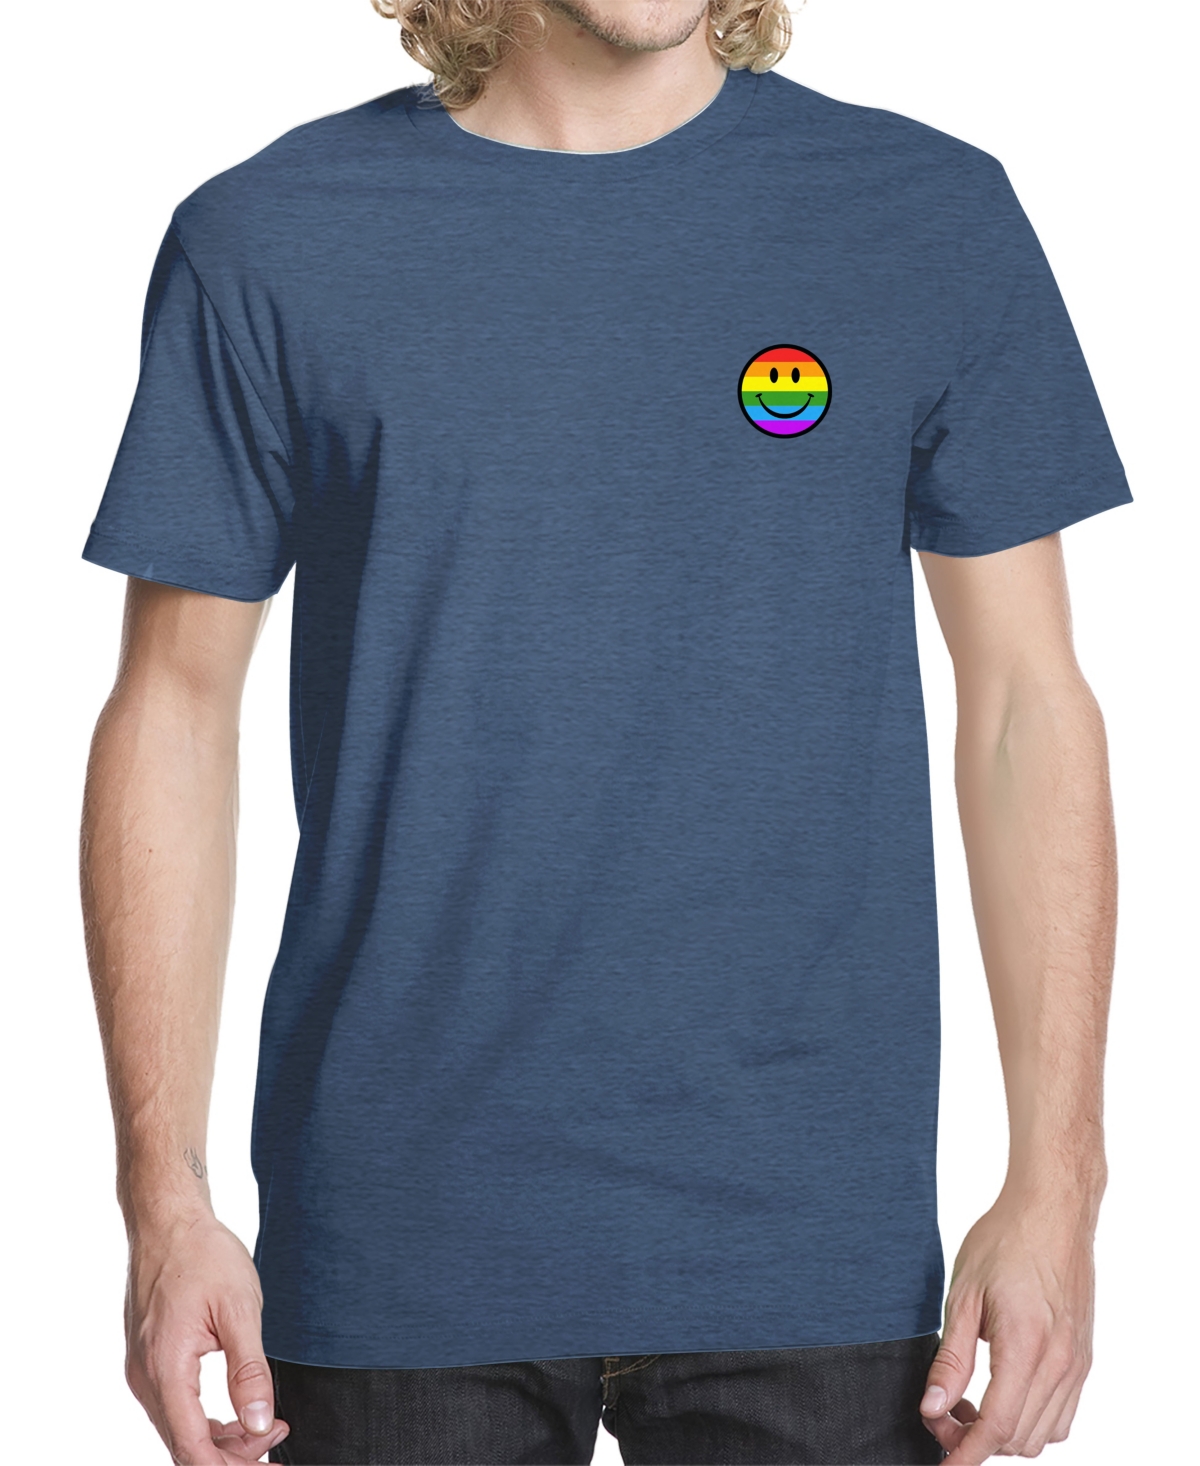 Buzz Shirts Men's Smiley Rainbow Graphic T-shirt